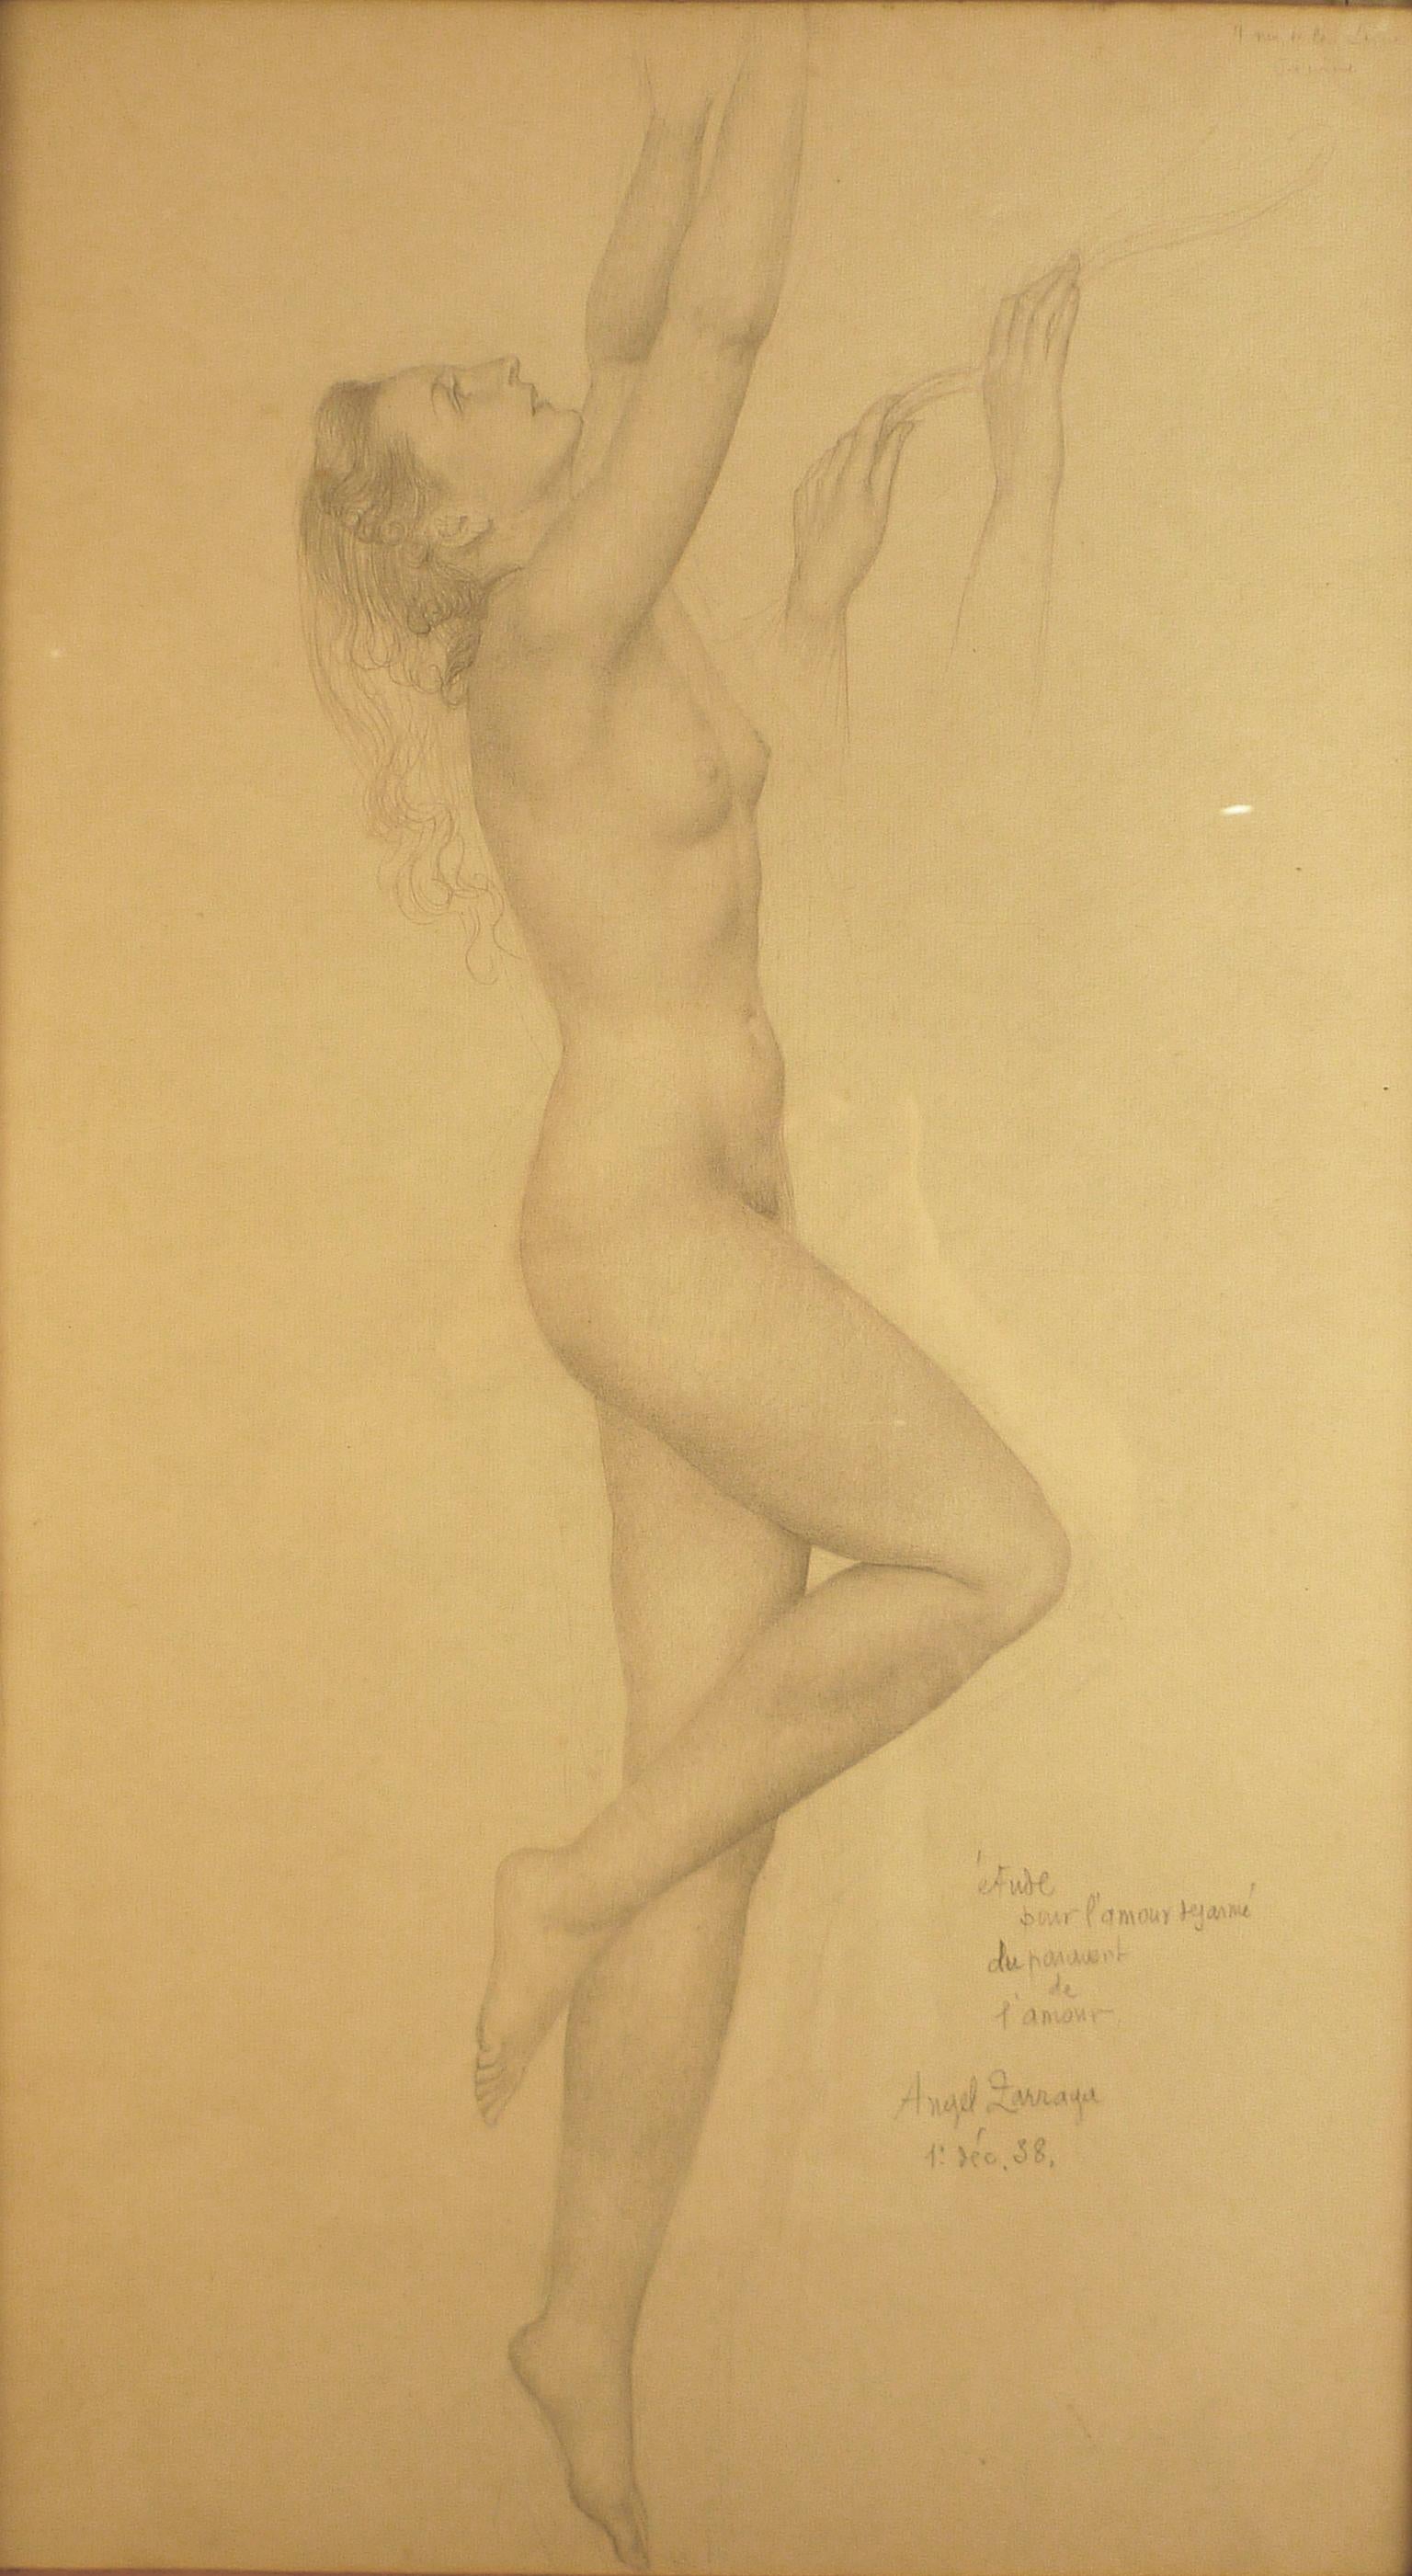 Ángel Zárraga Argüelles Nude Painting - "Janine", 20th Century pencil drawing on paper by Mexican artist Ángel Zárraga 